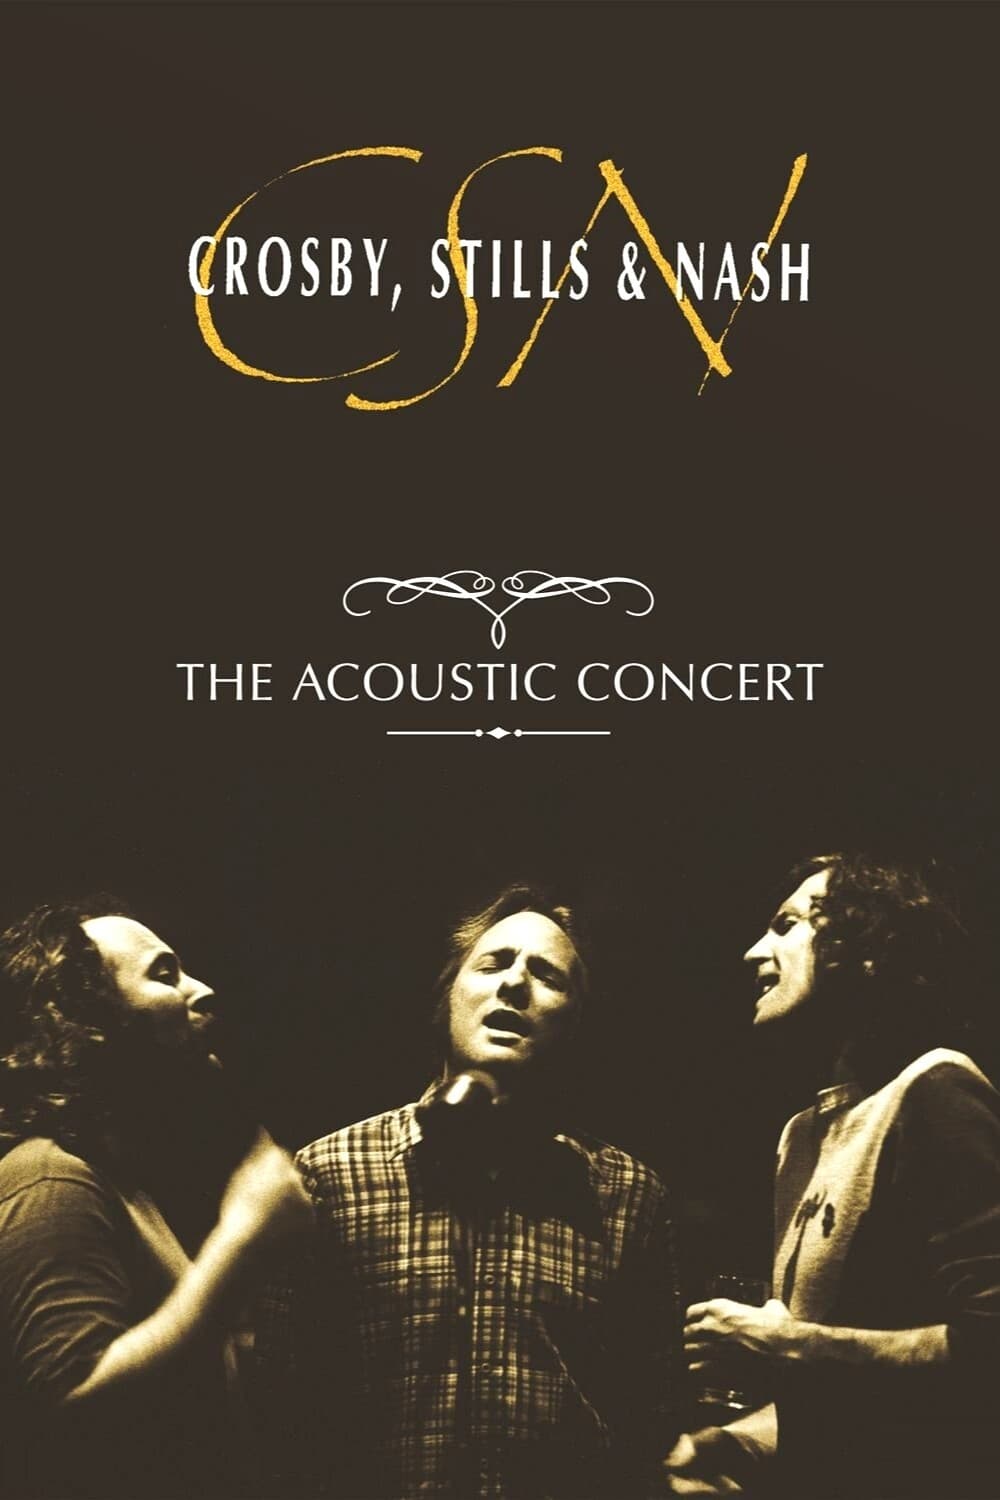 Crosby, Stills & Nash – The Acoustic Concert